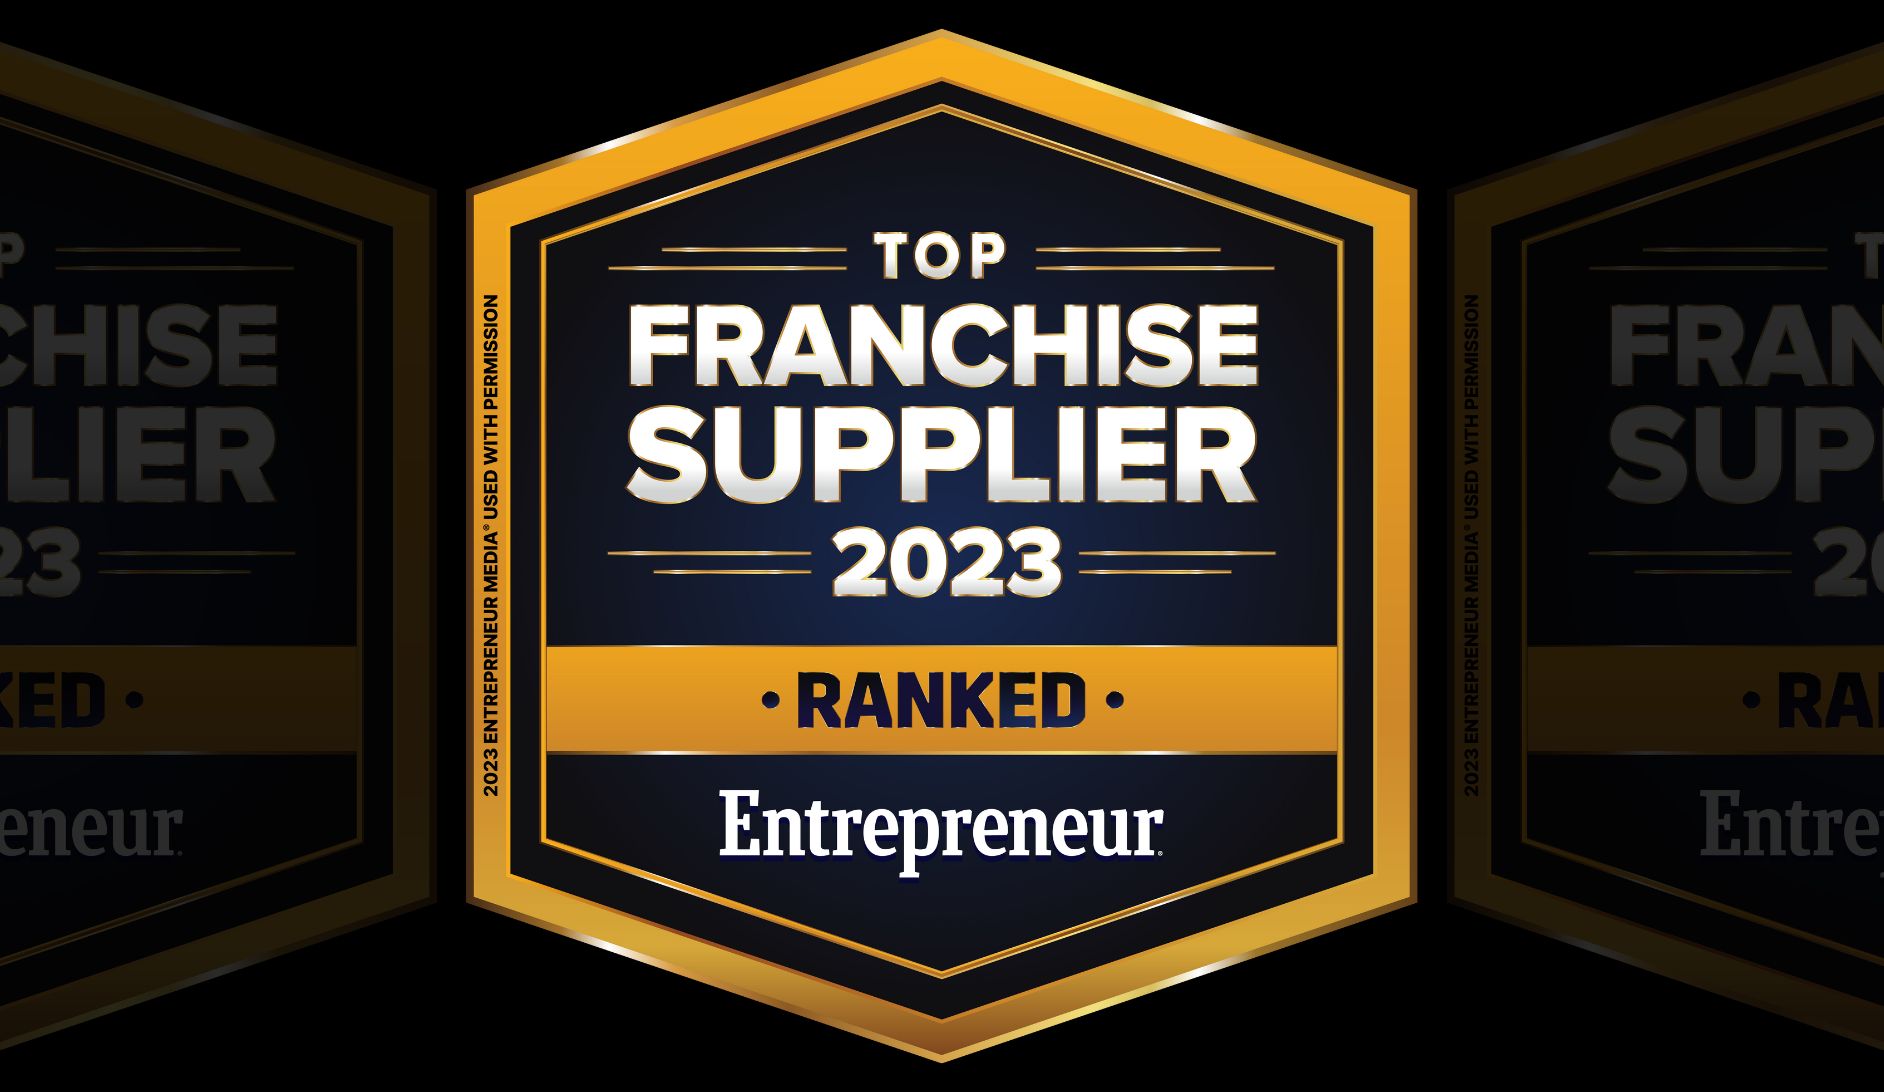 Top franchise supplier 2023 by Entrepreneur badge